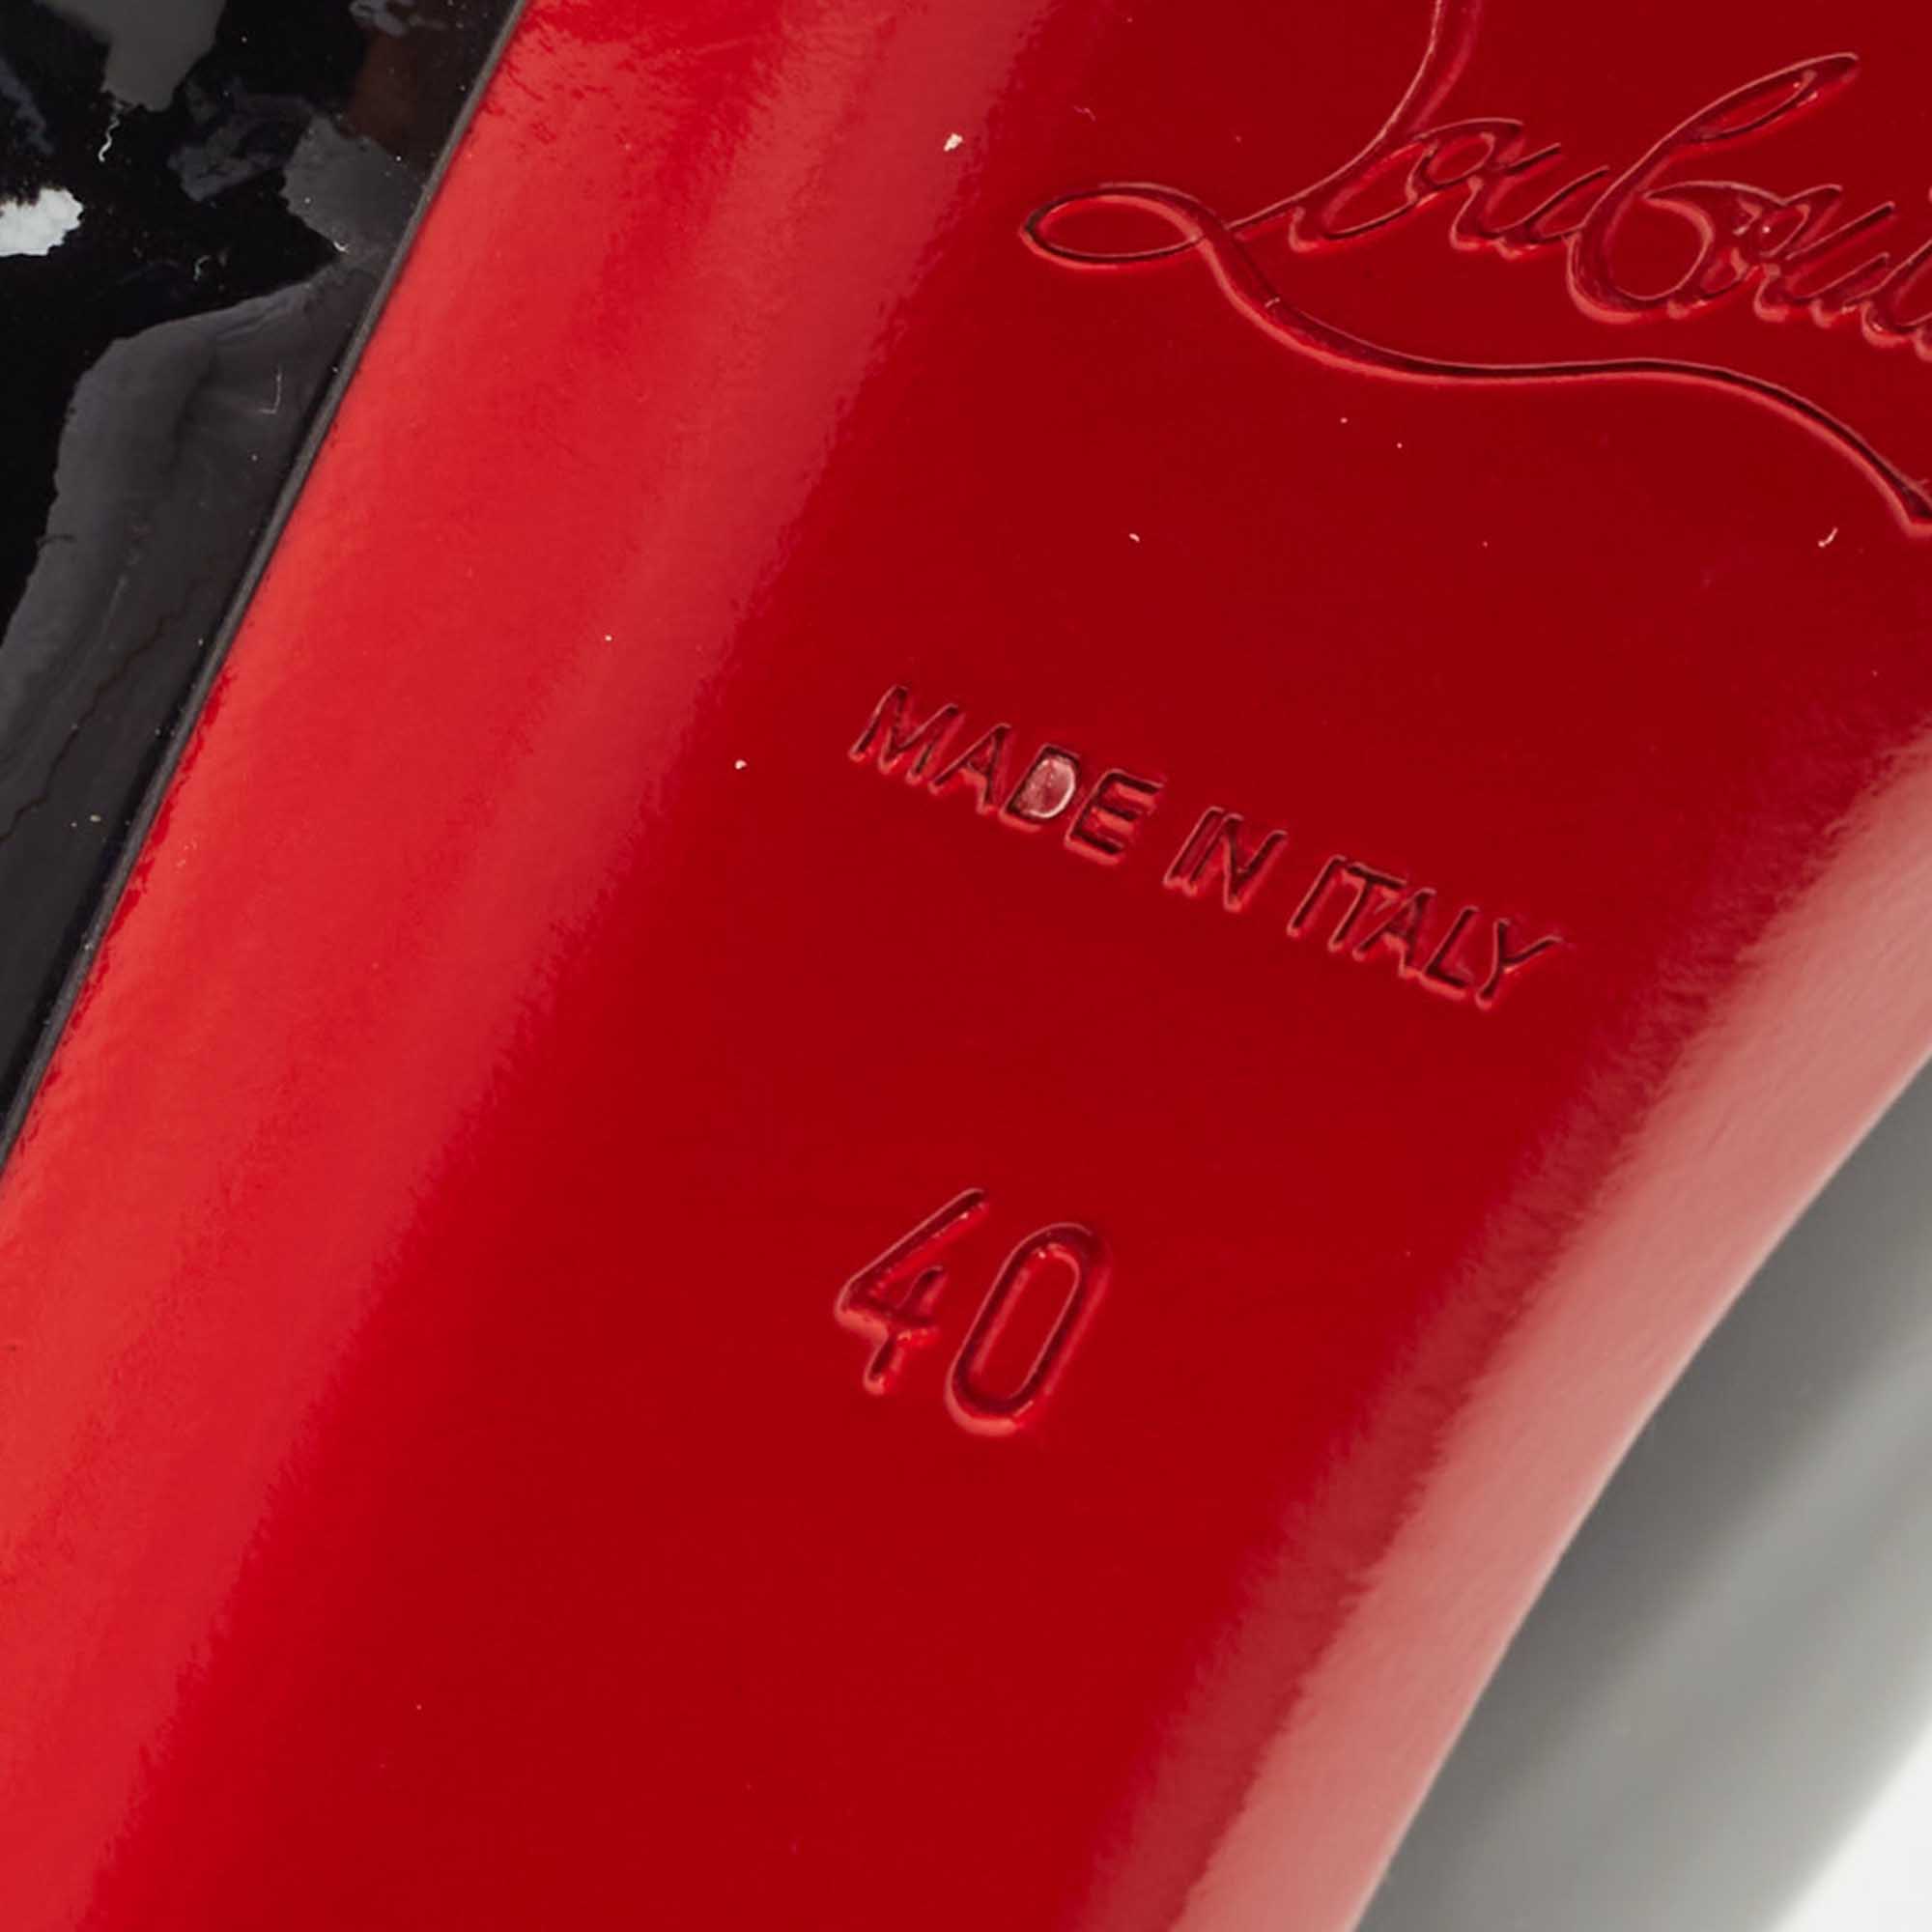 Christian Louboutin Black Patent Leather Palais Royal Slingback Pumps Size 40